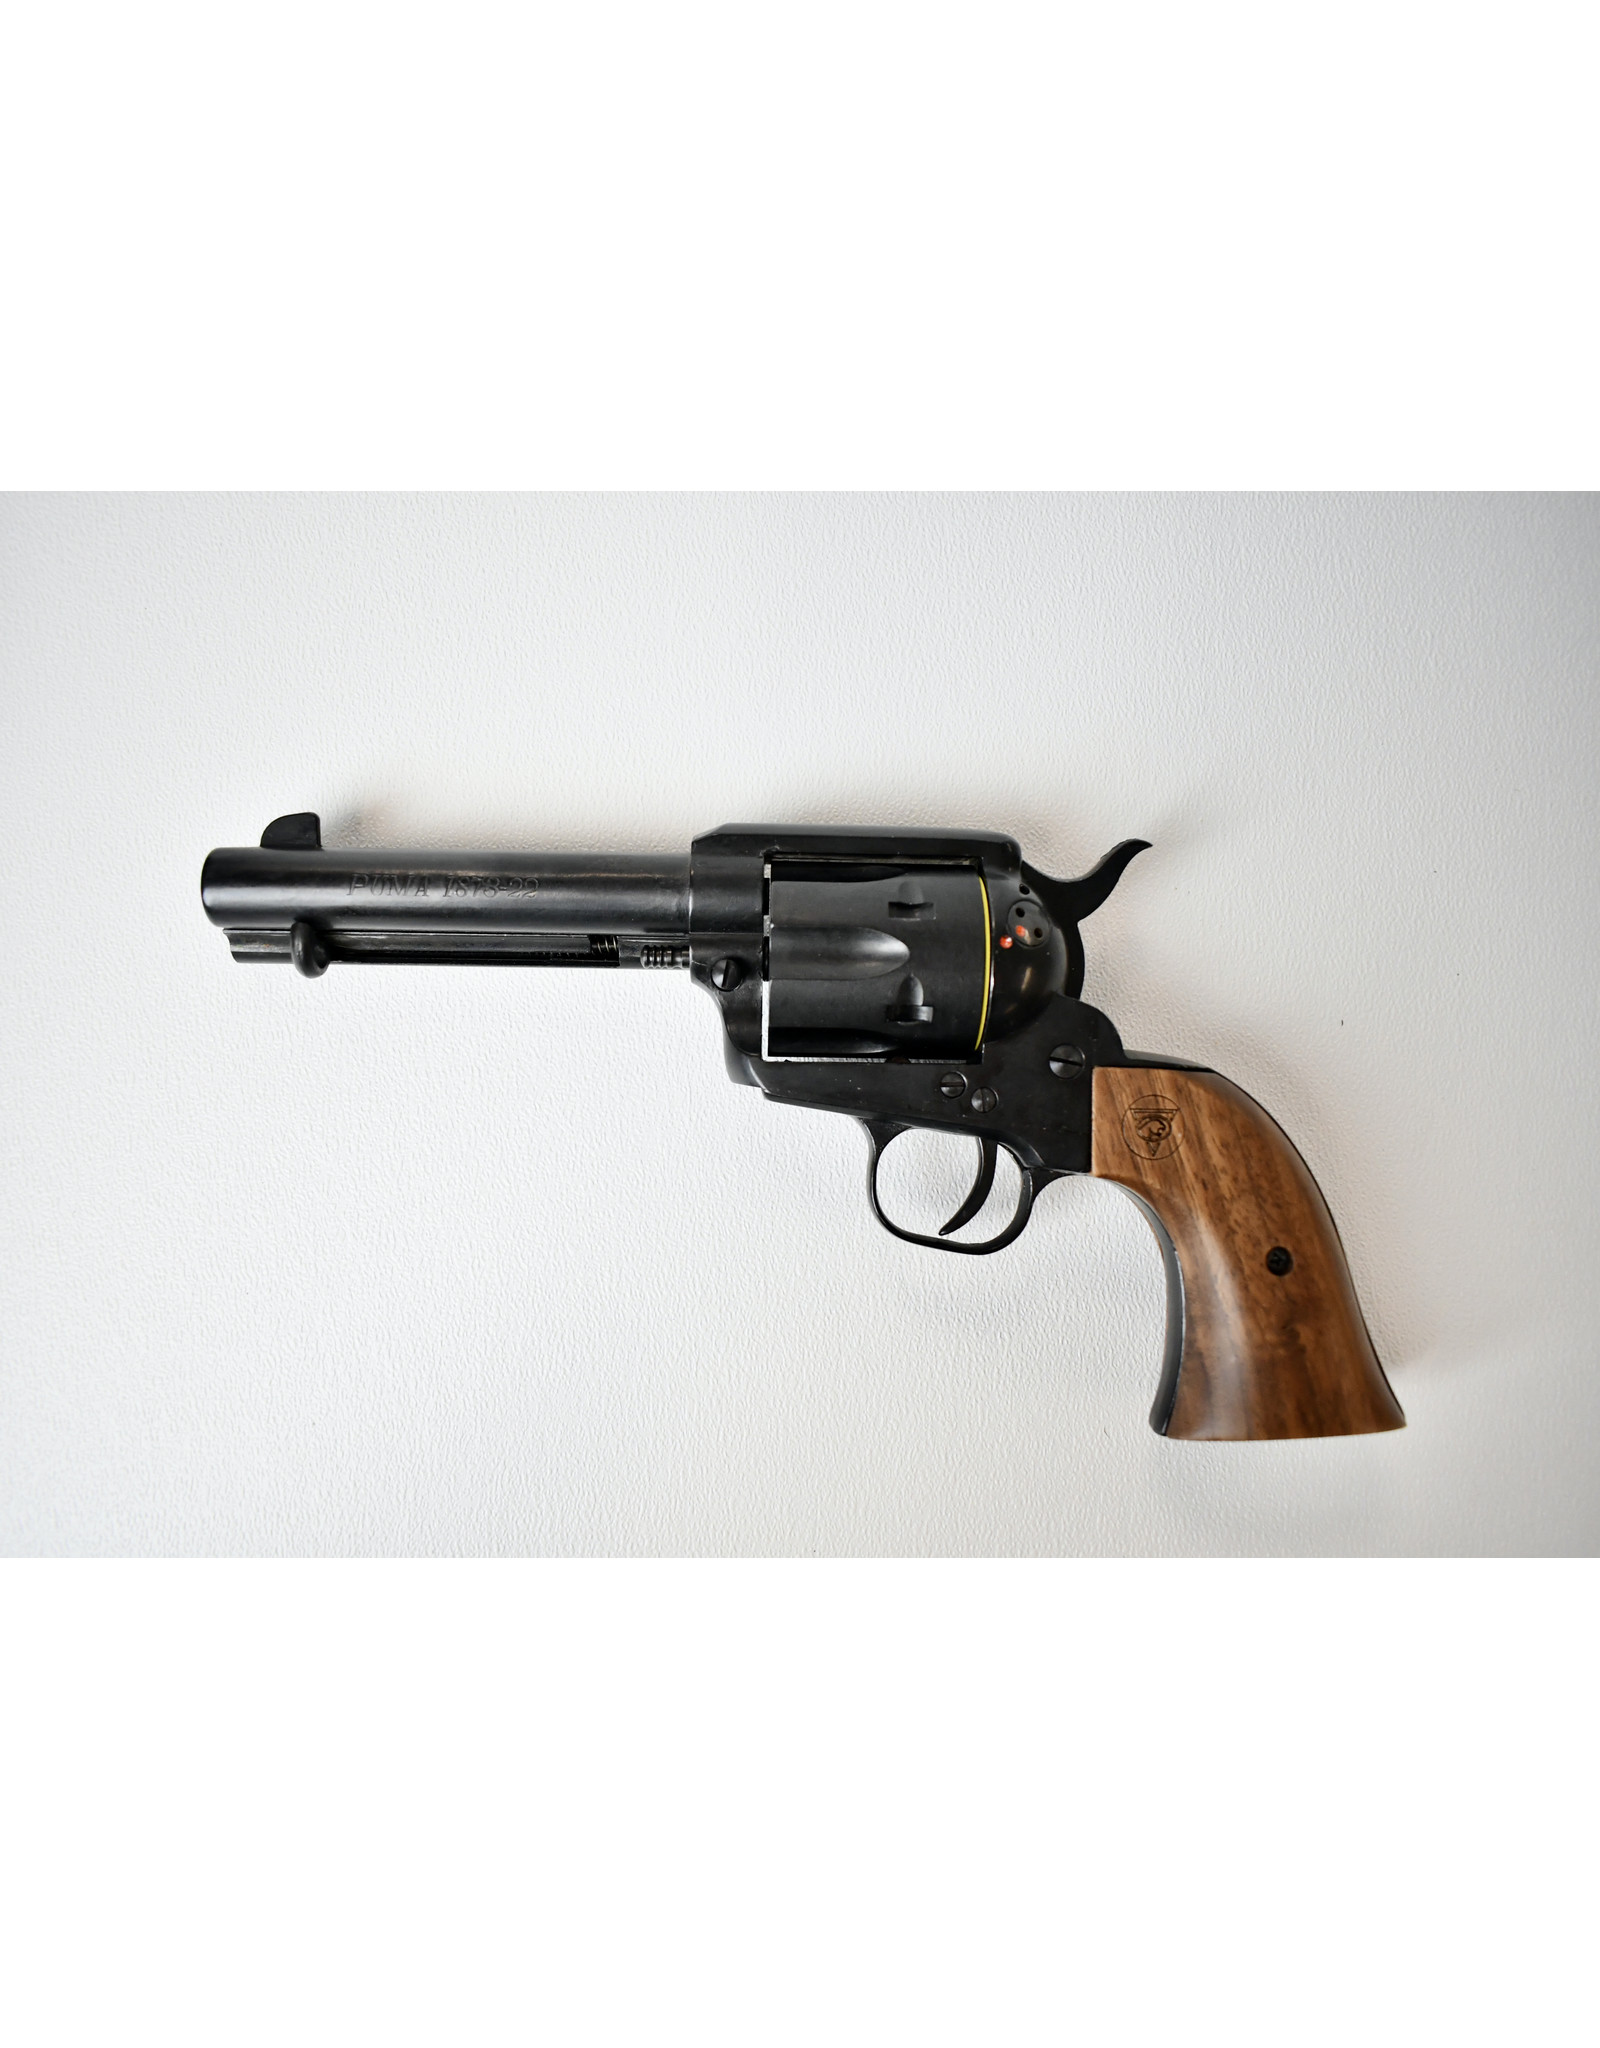 CHIAPPA Chiappa 1873 .22 Revolver Puma  S/N 11L35129 LN 17